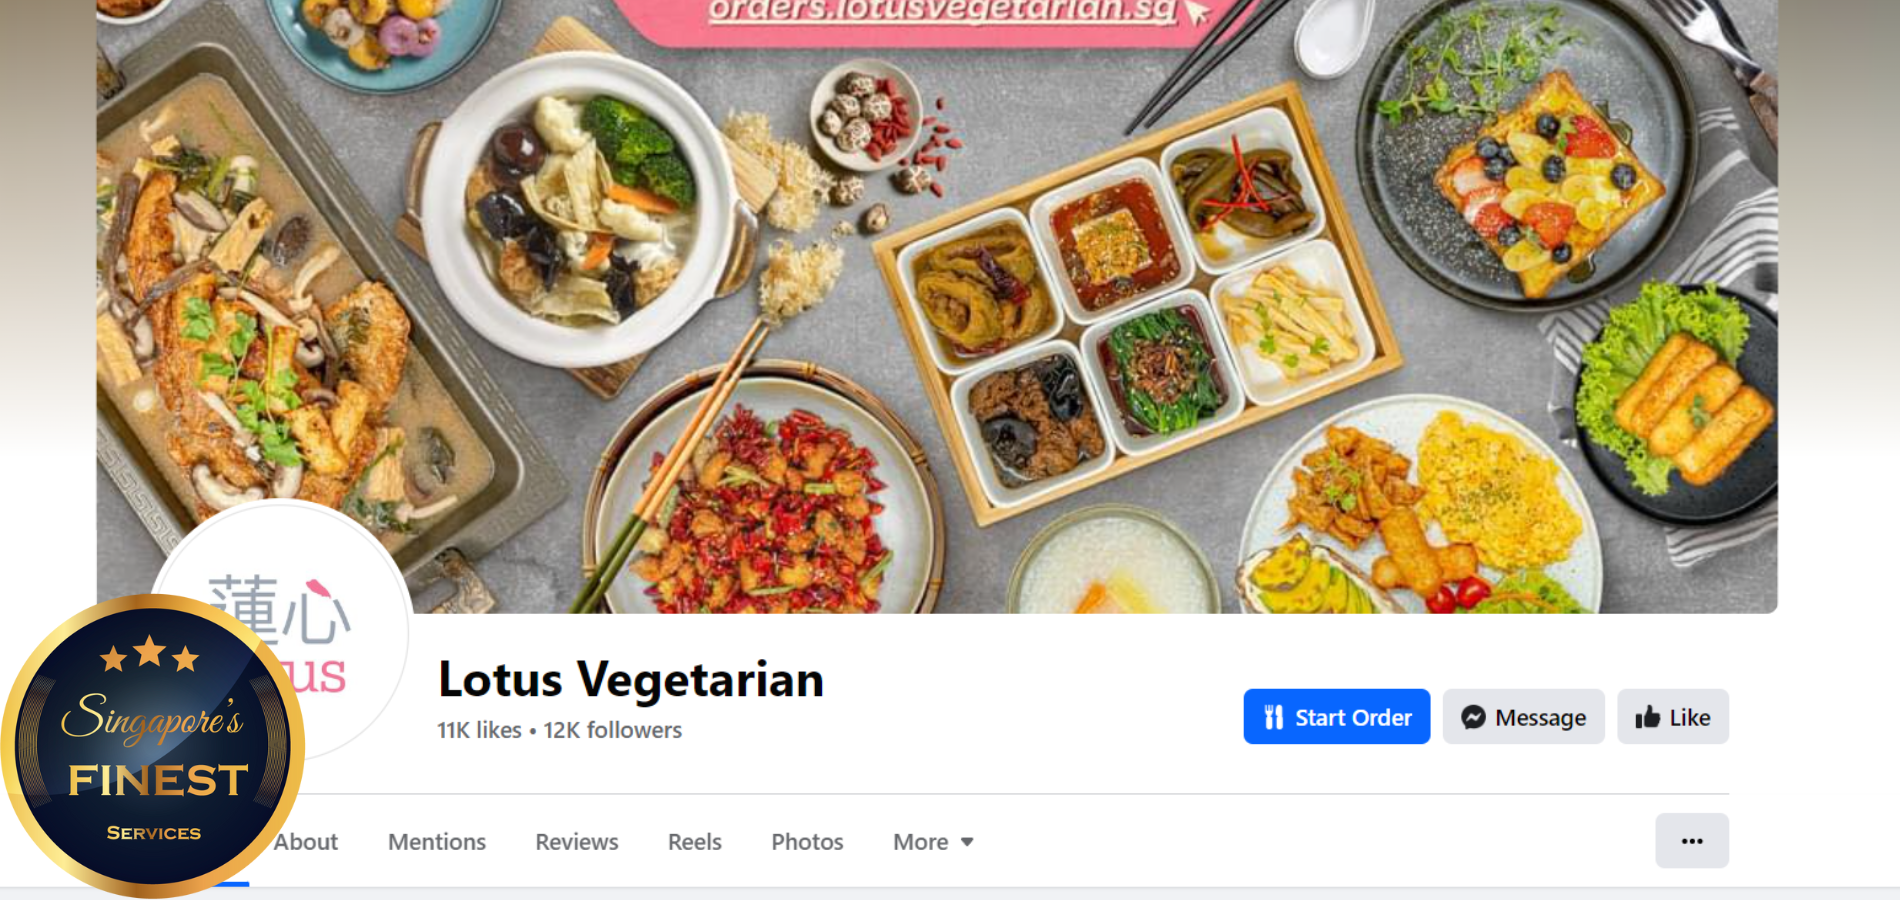 Best Vegetarian Restaurant in Singapore